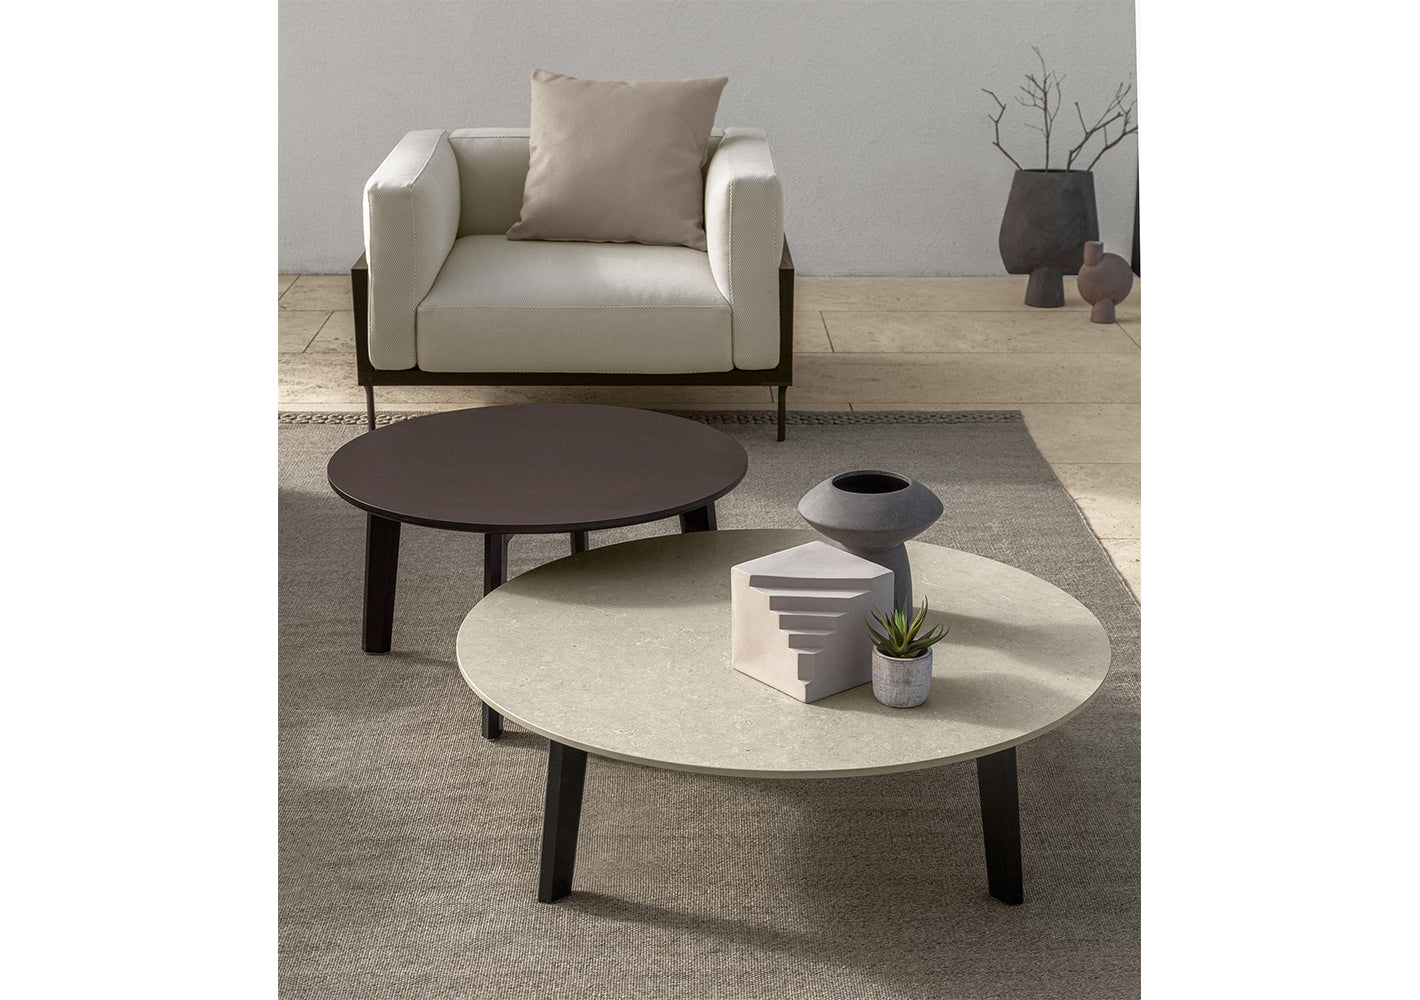 CleoSoft//Wood Round Coffee Table Medium